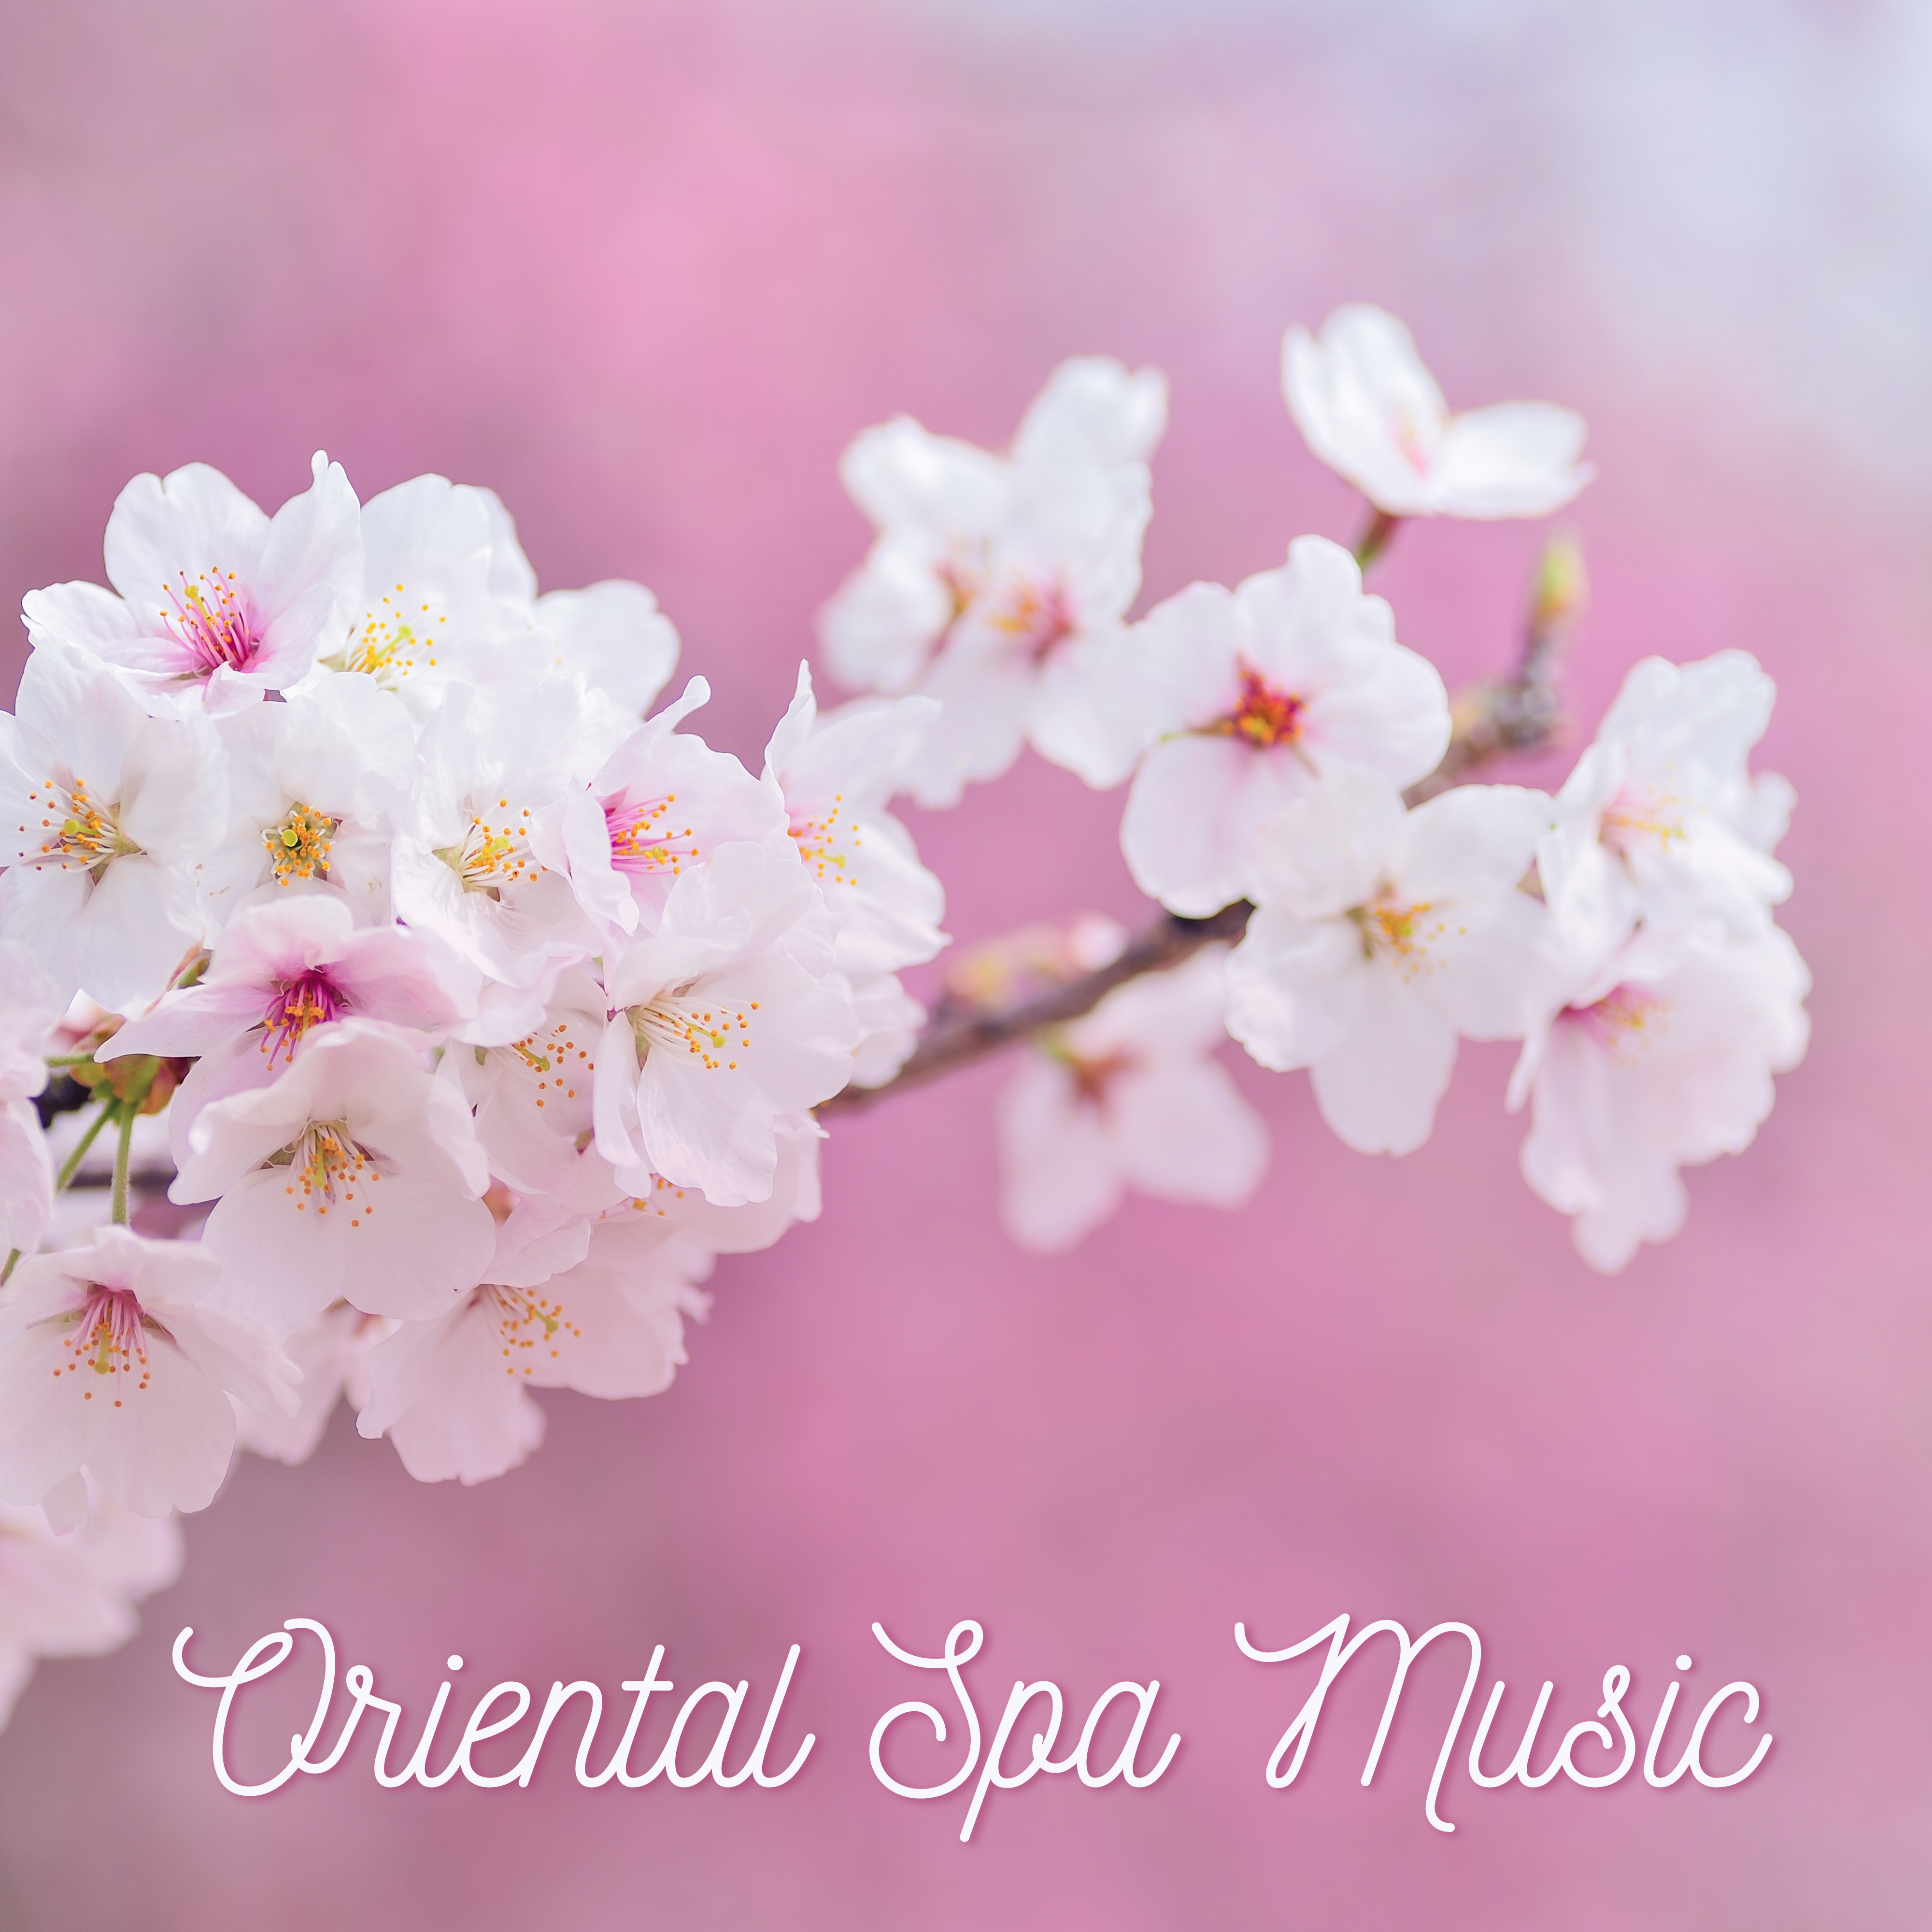 Oriental Spa Music